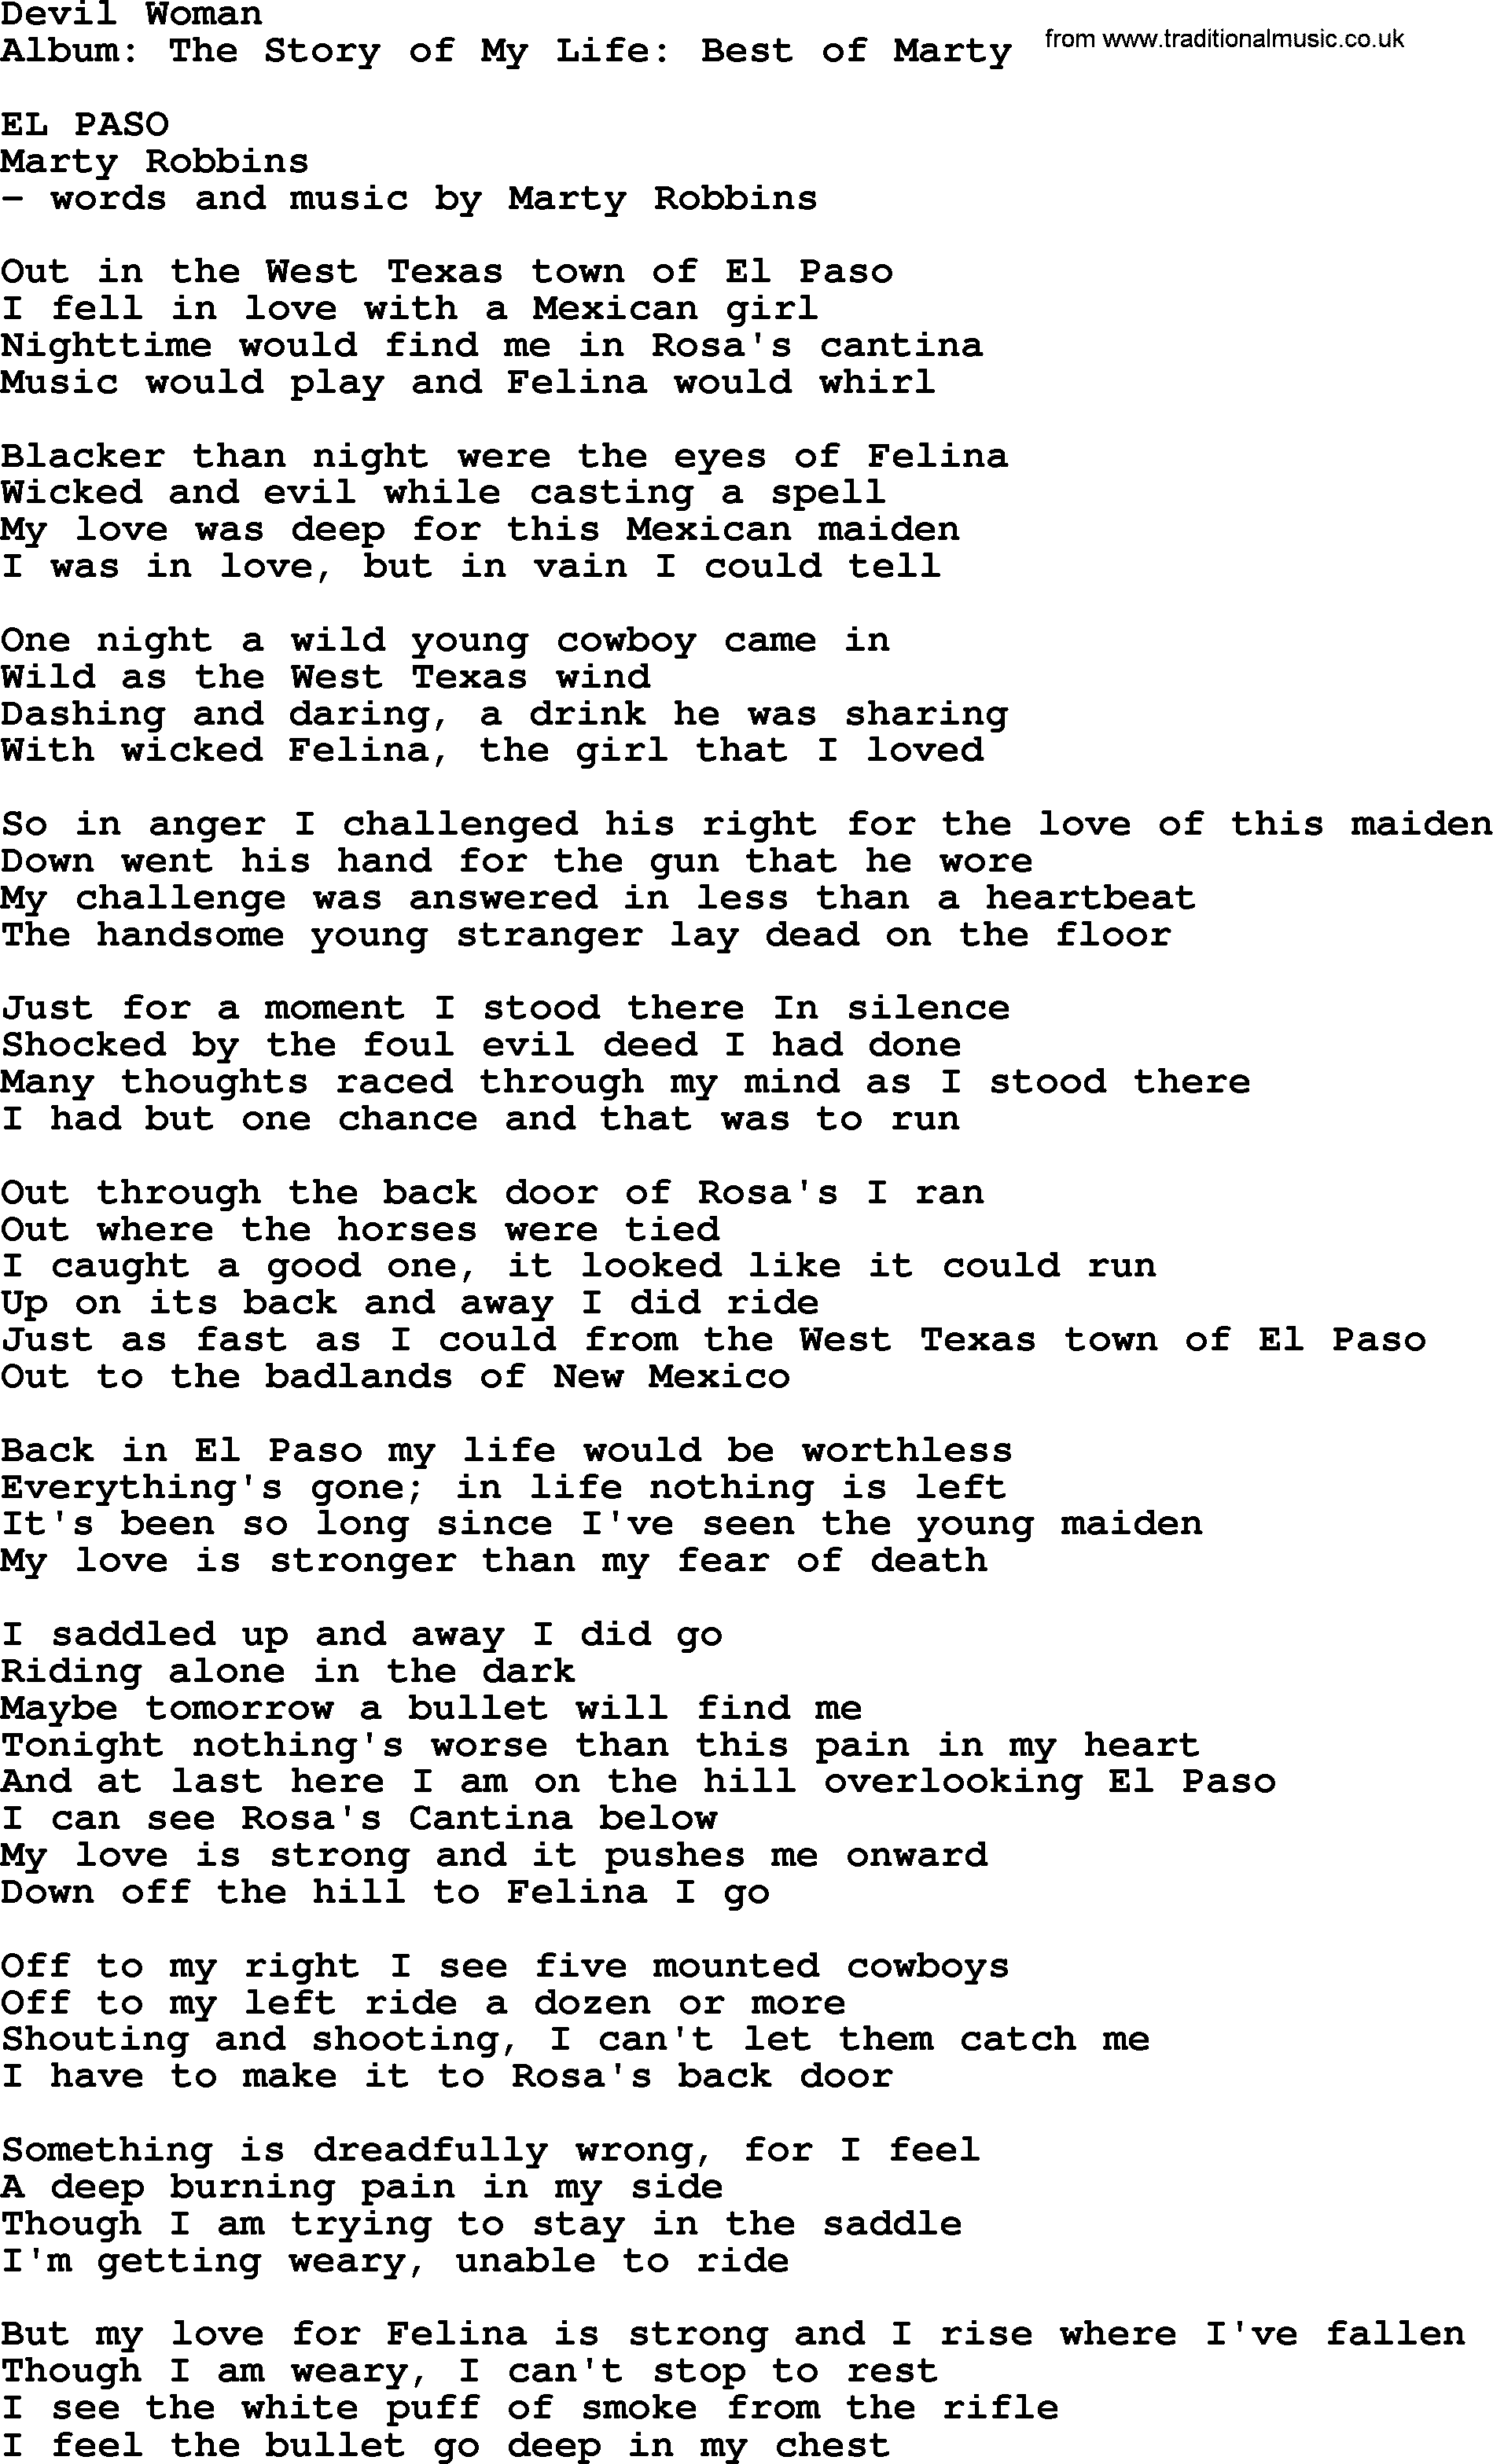 Marty Robbins song: Devil Woman, lyrics